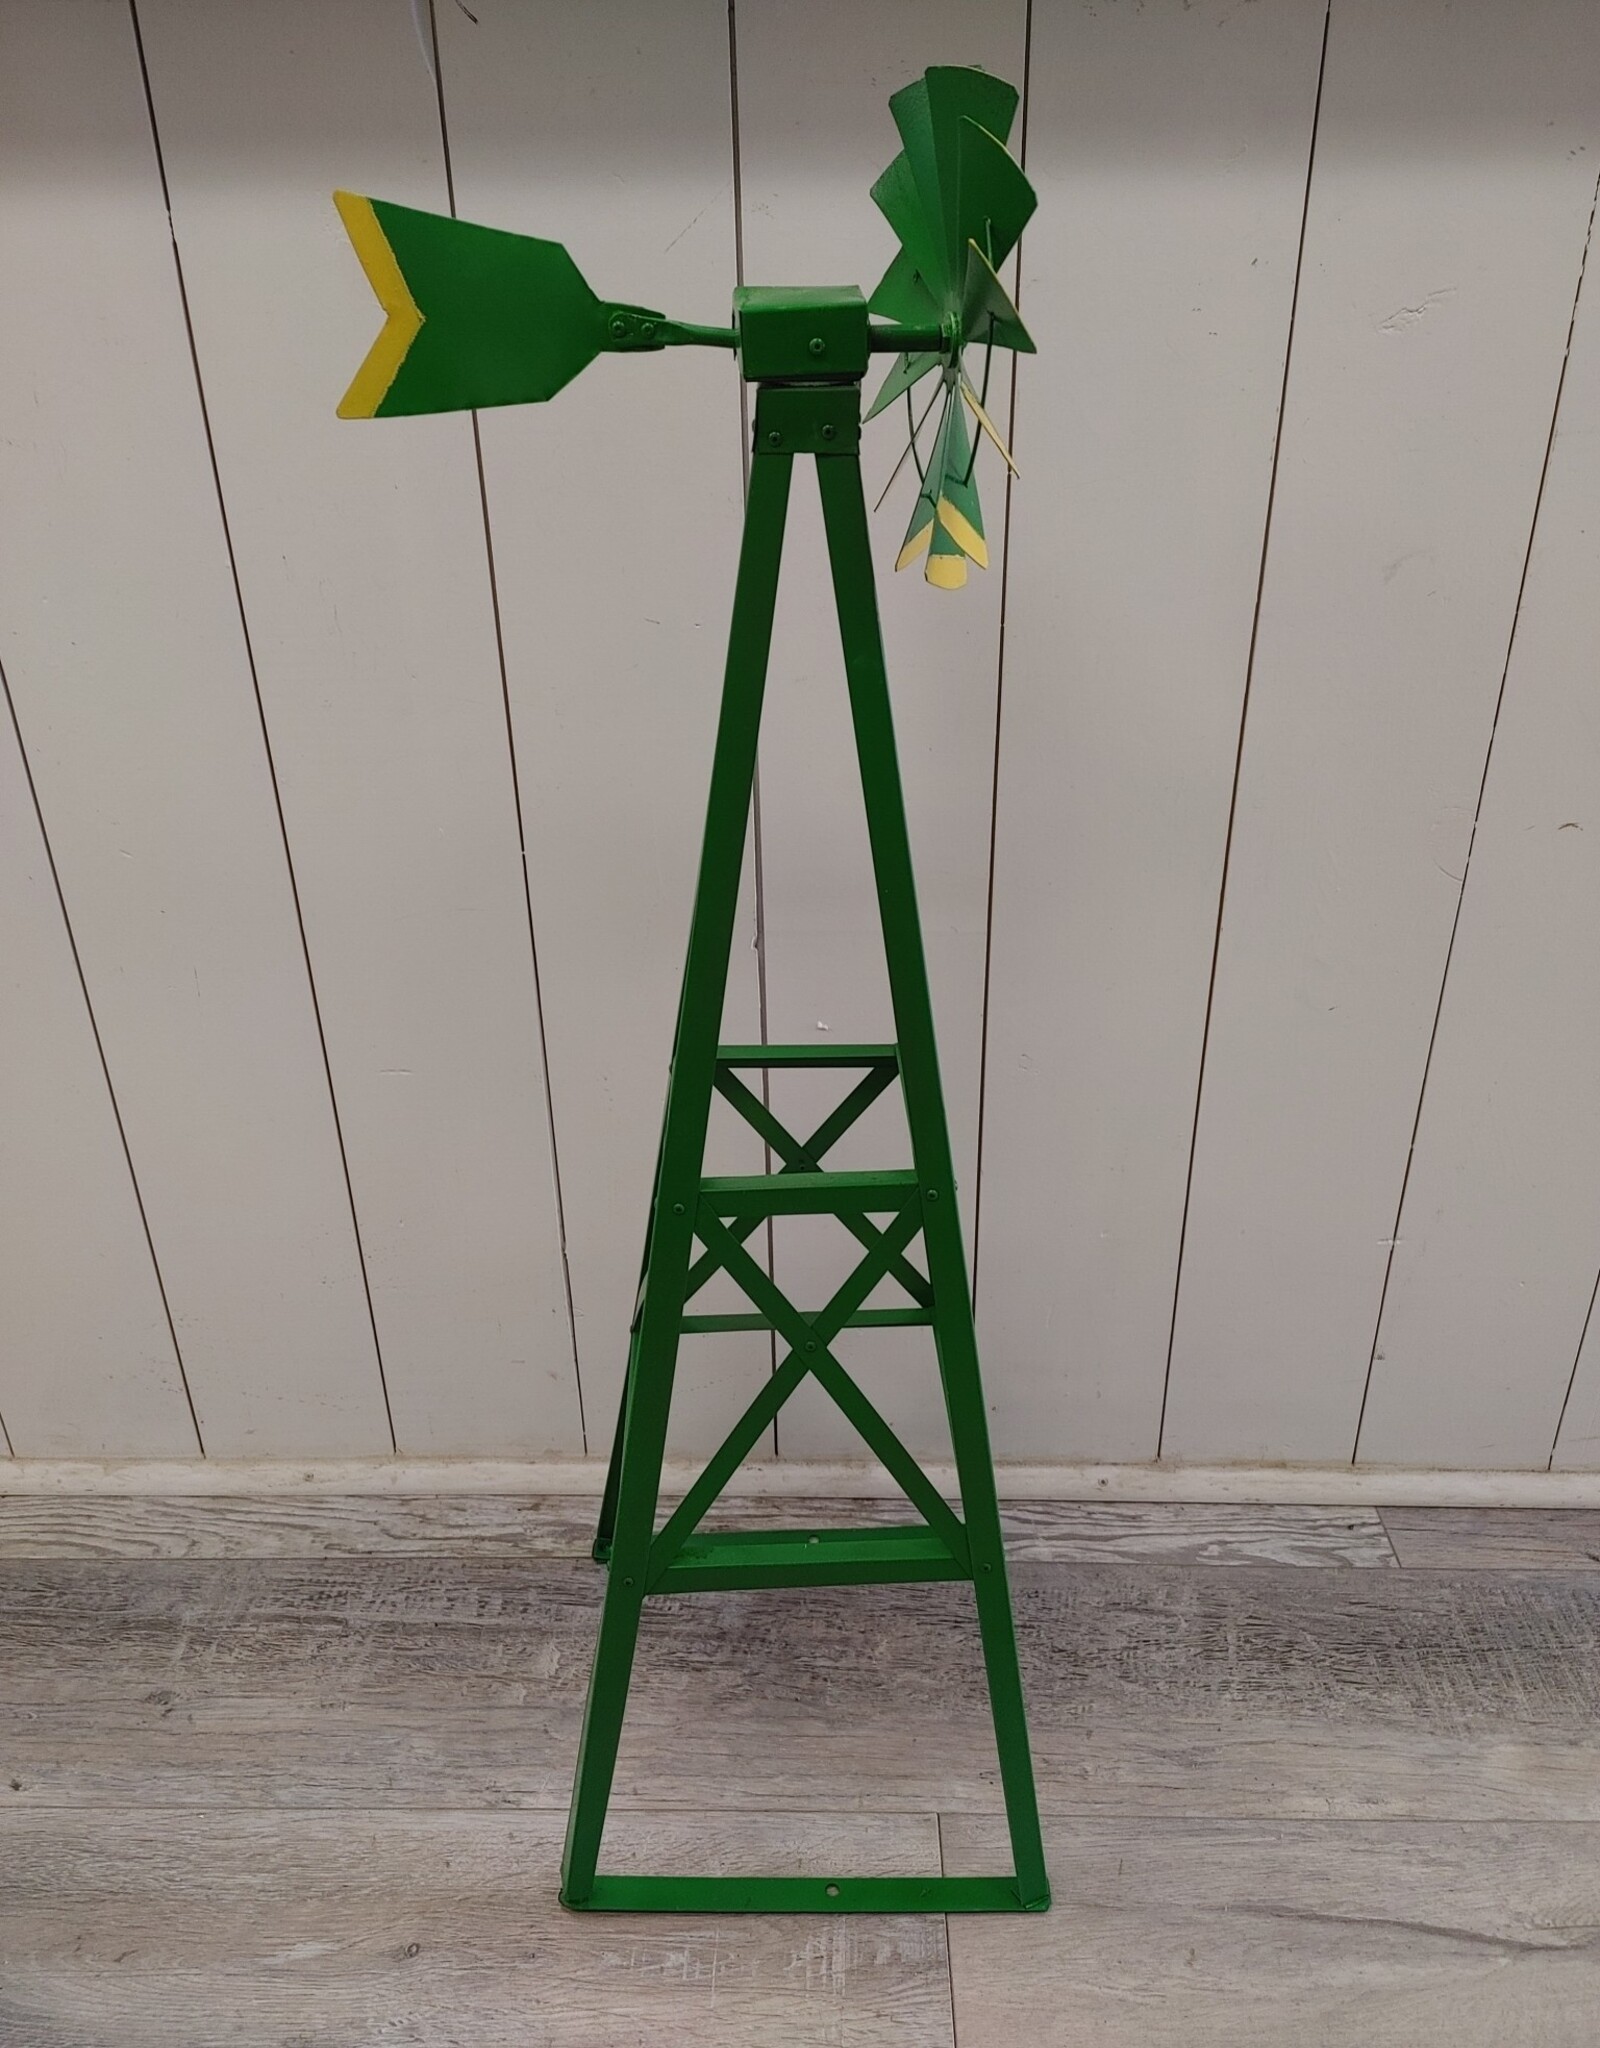 Ron White 33" Handmade Ornamental Windmill - green/yellow